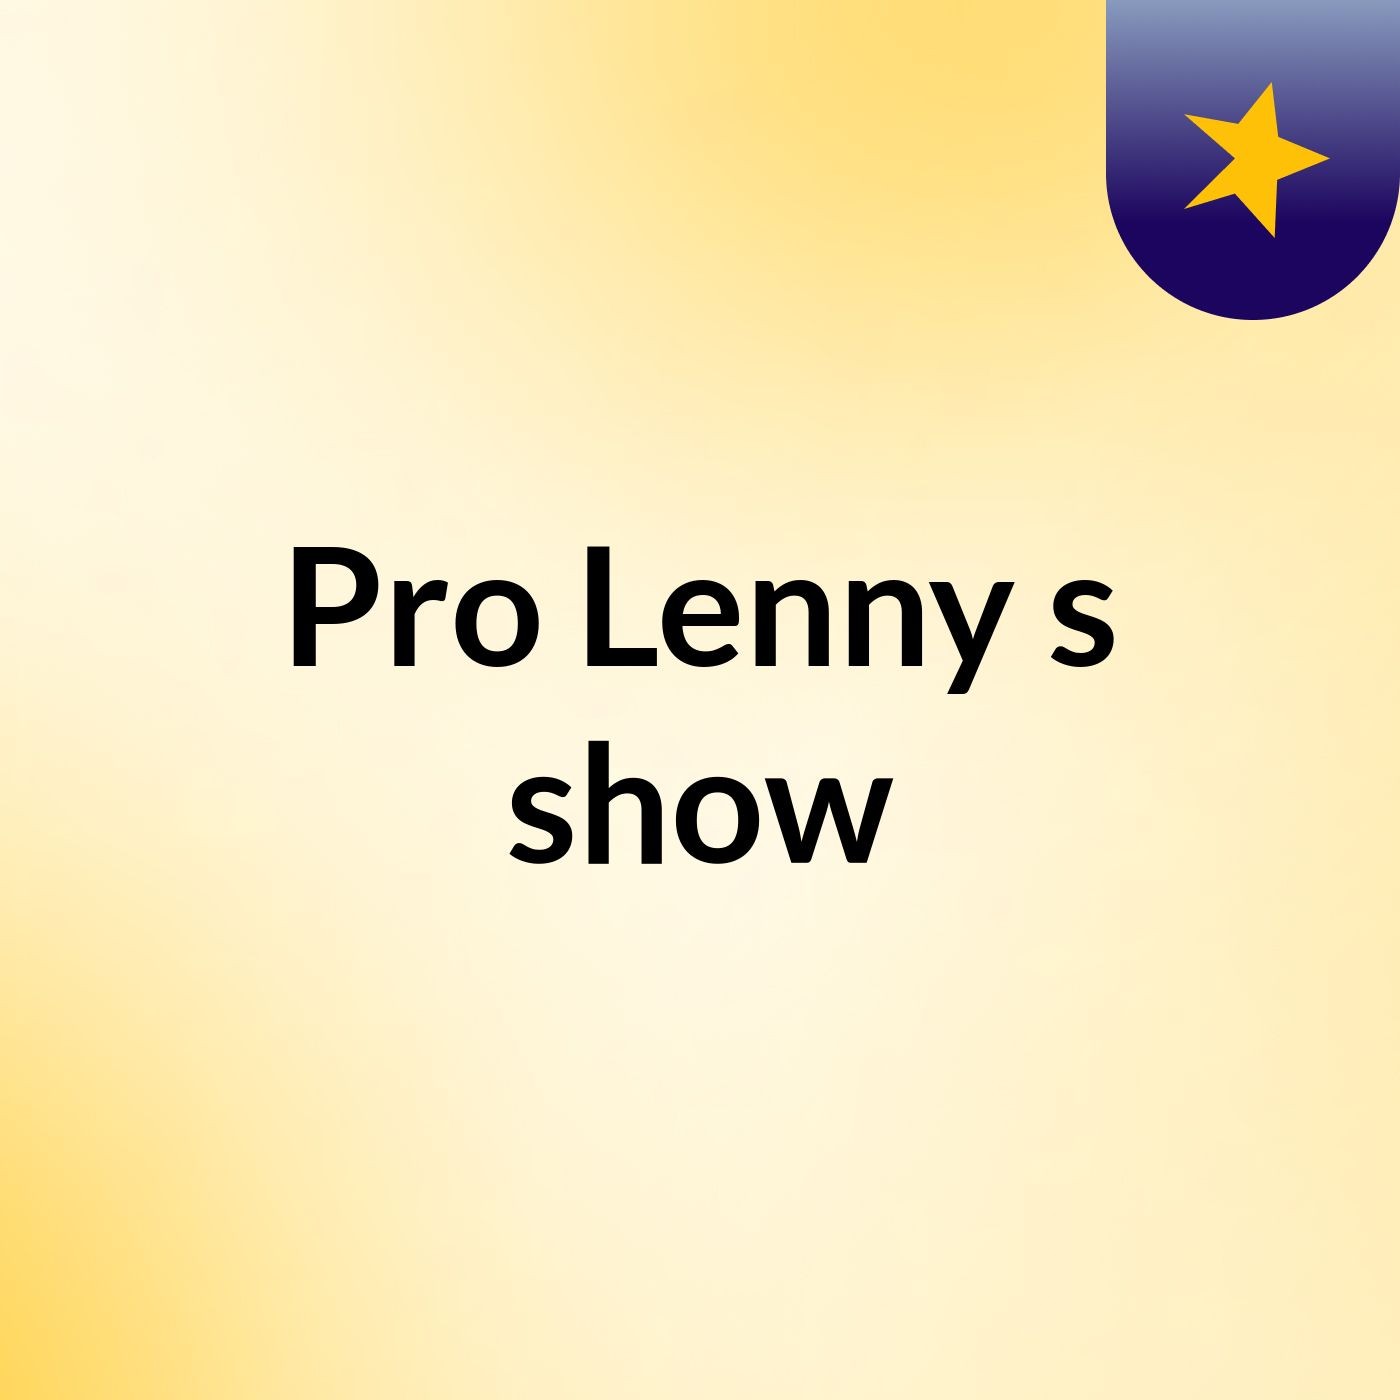 Pro Lenny's show